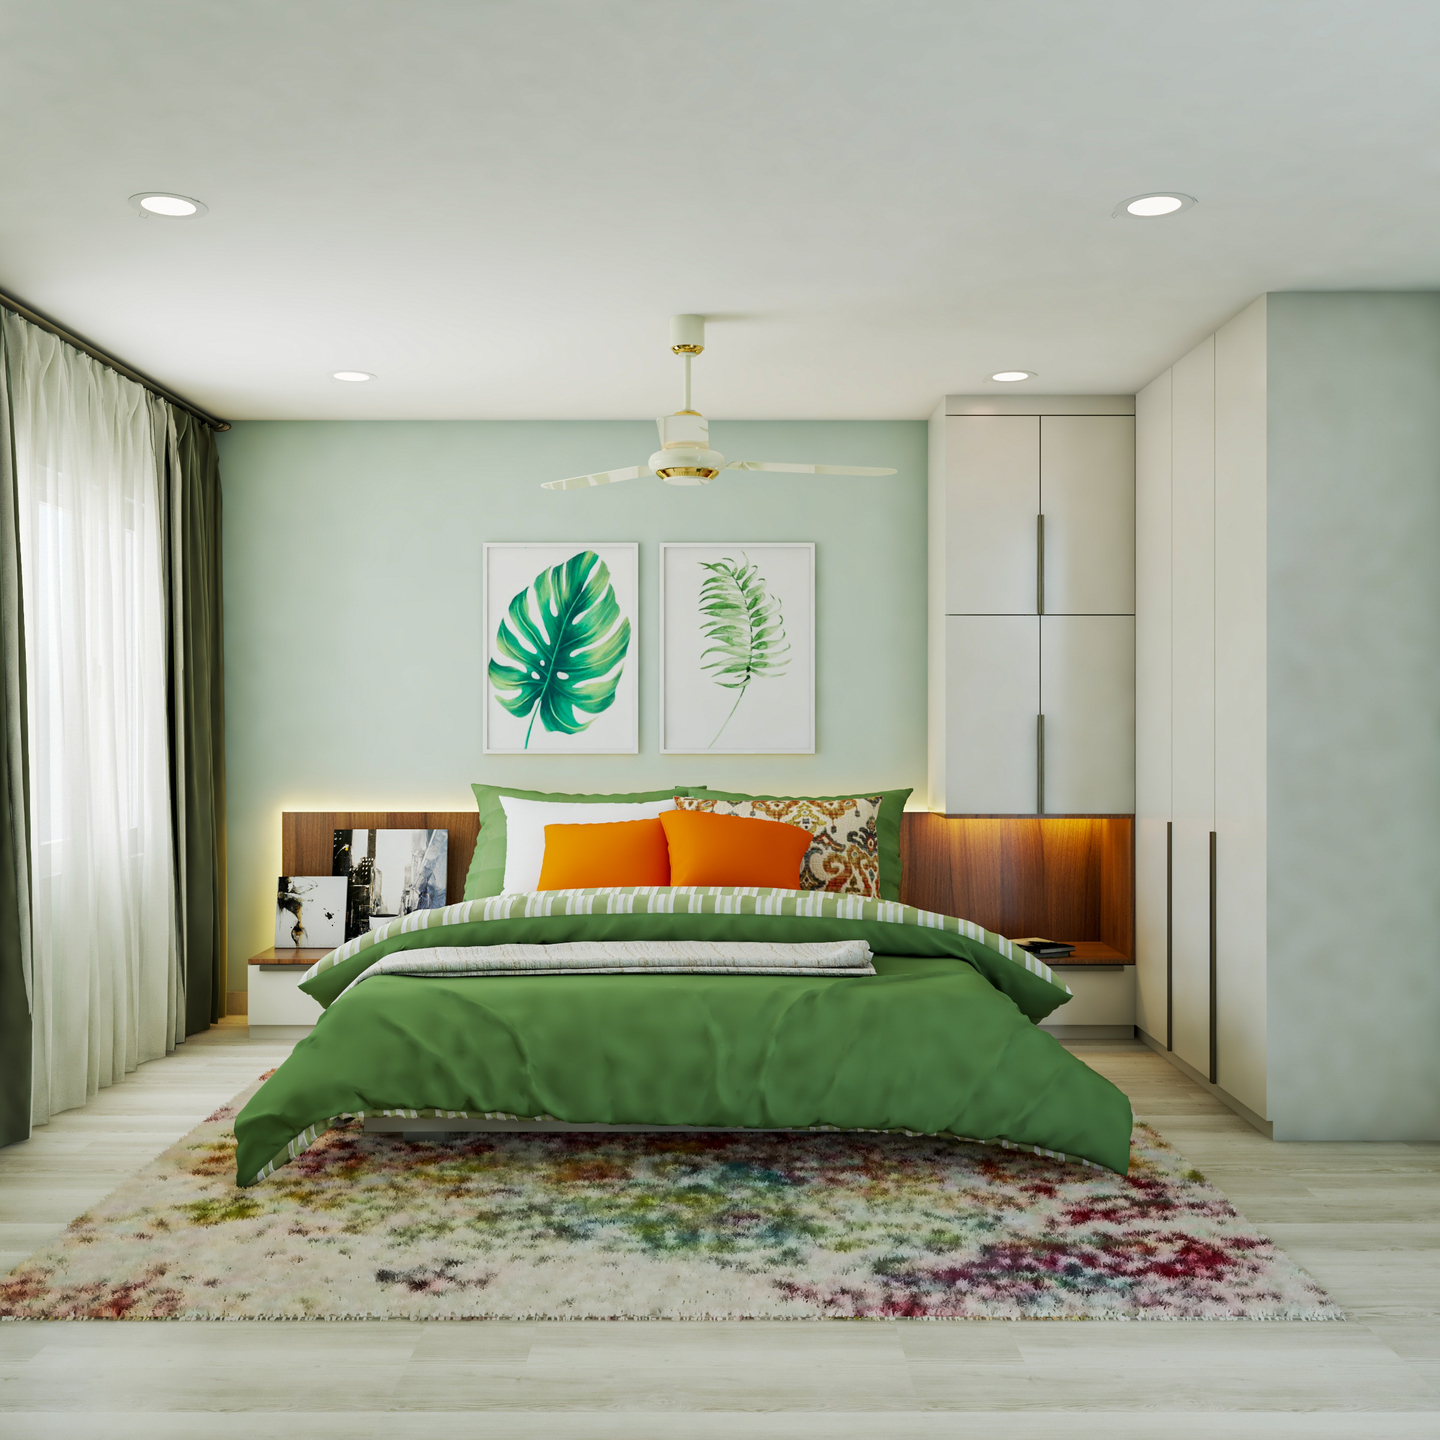 Earthy-Toned Bedroom Design With Maximum Storage - Livspace